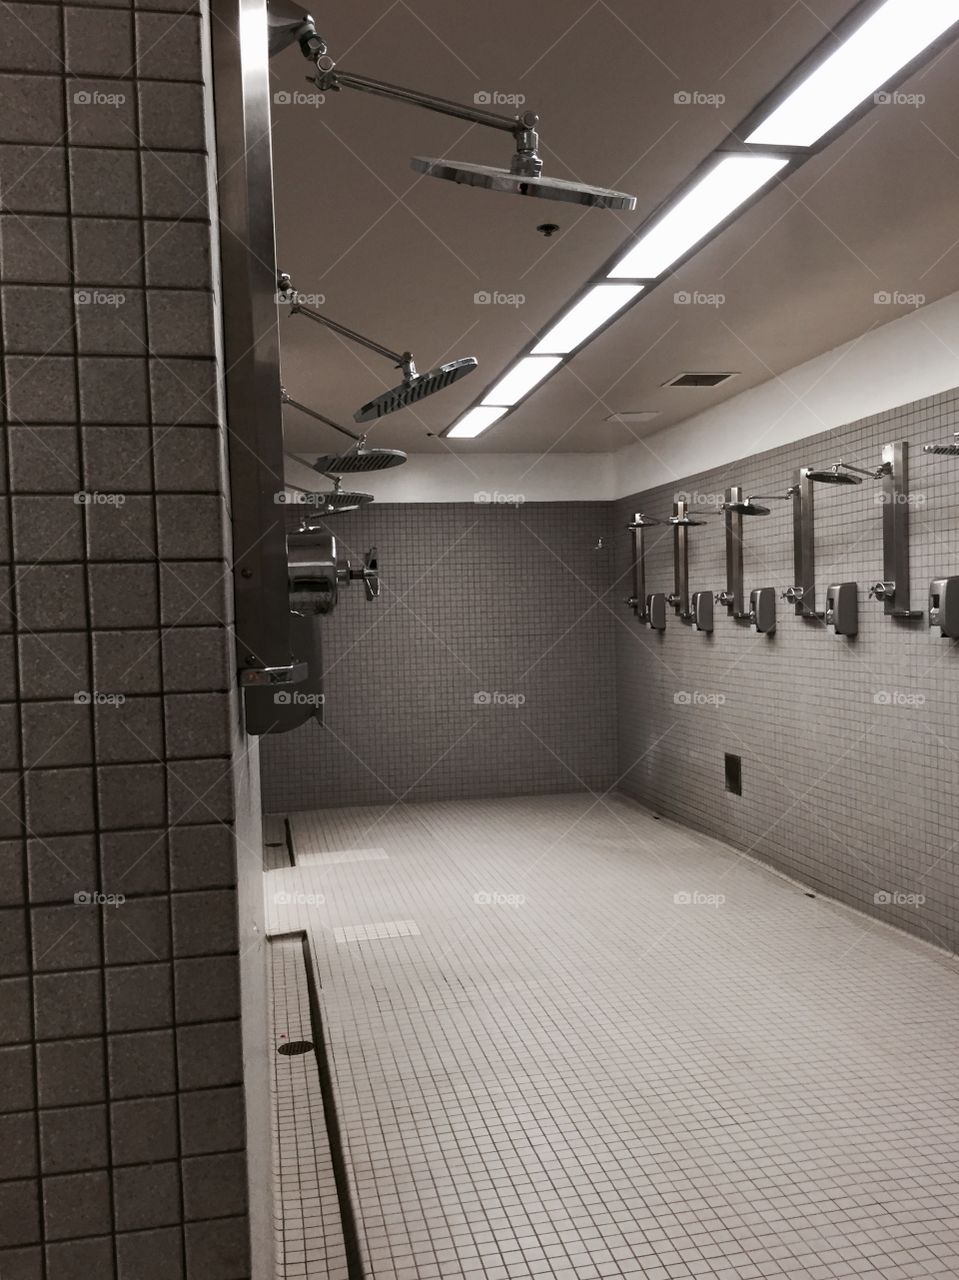 Locker Room. USC Trojan's Locker Room Showers